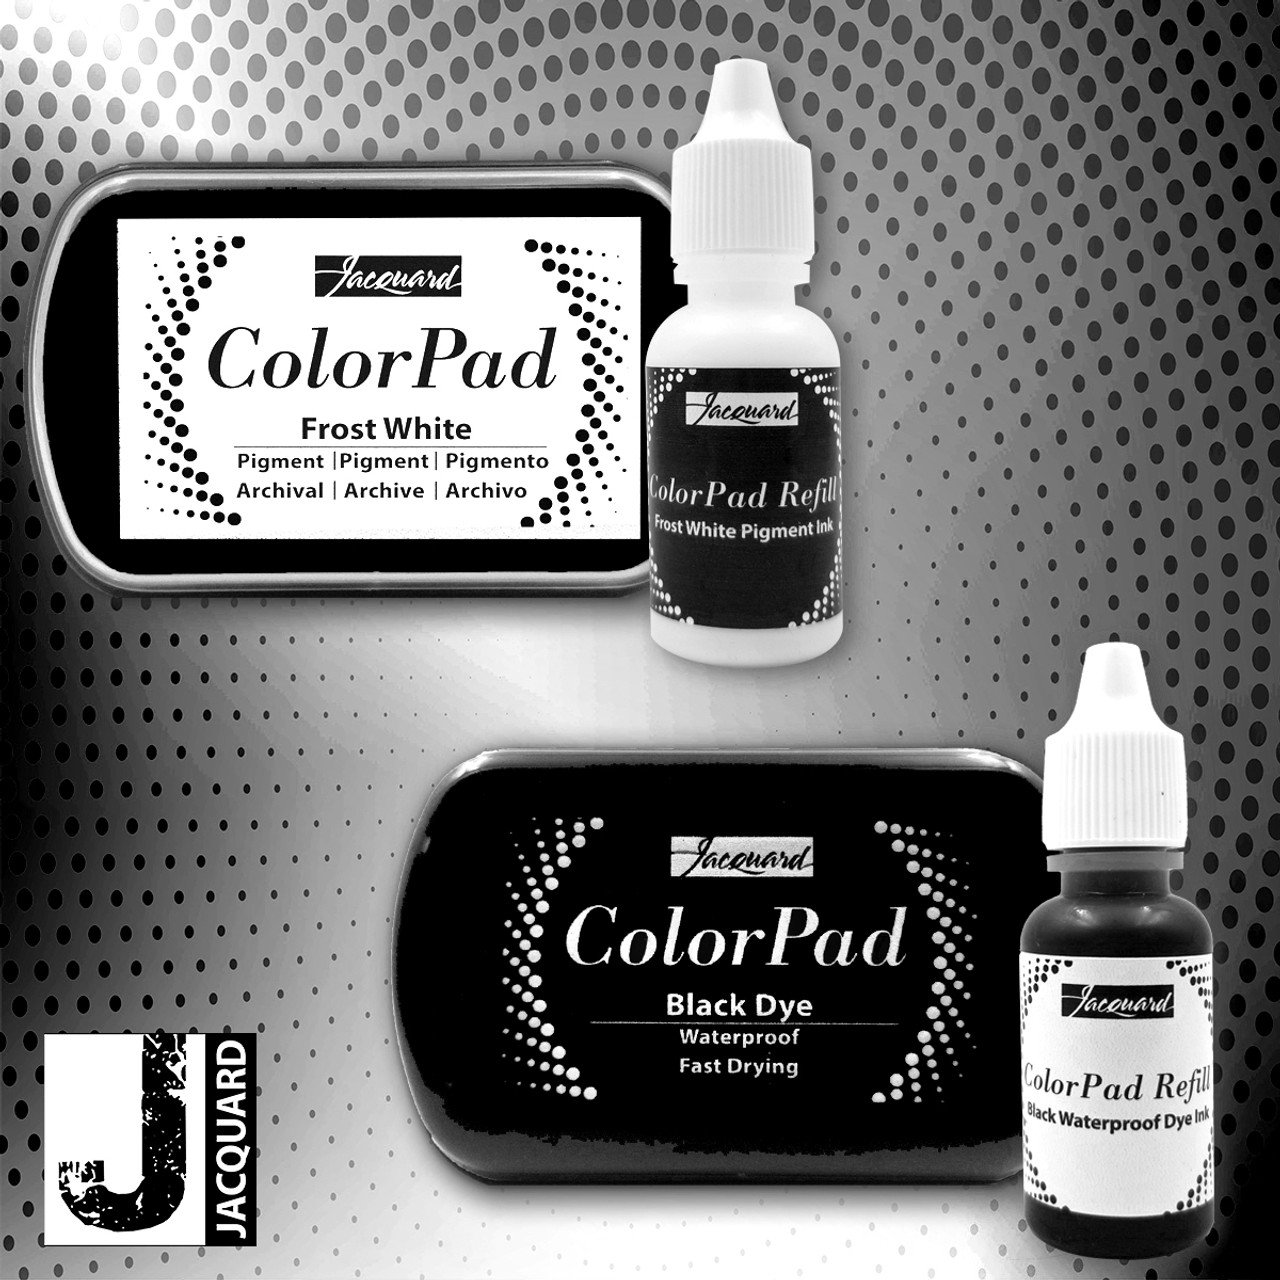 Jacquard Colorpad Ink Pad & Refill 4 Pack Bundle - Scrapbooking